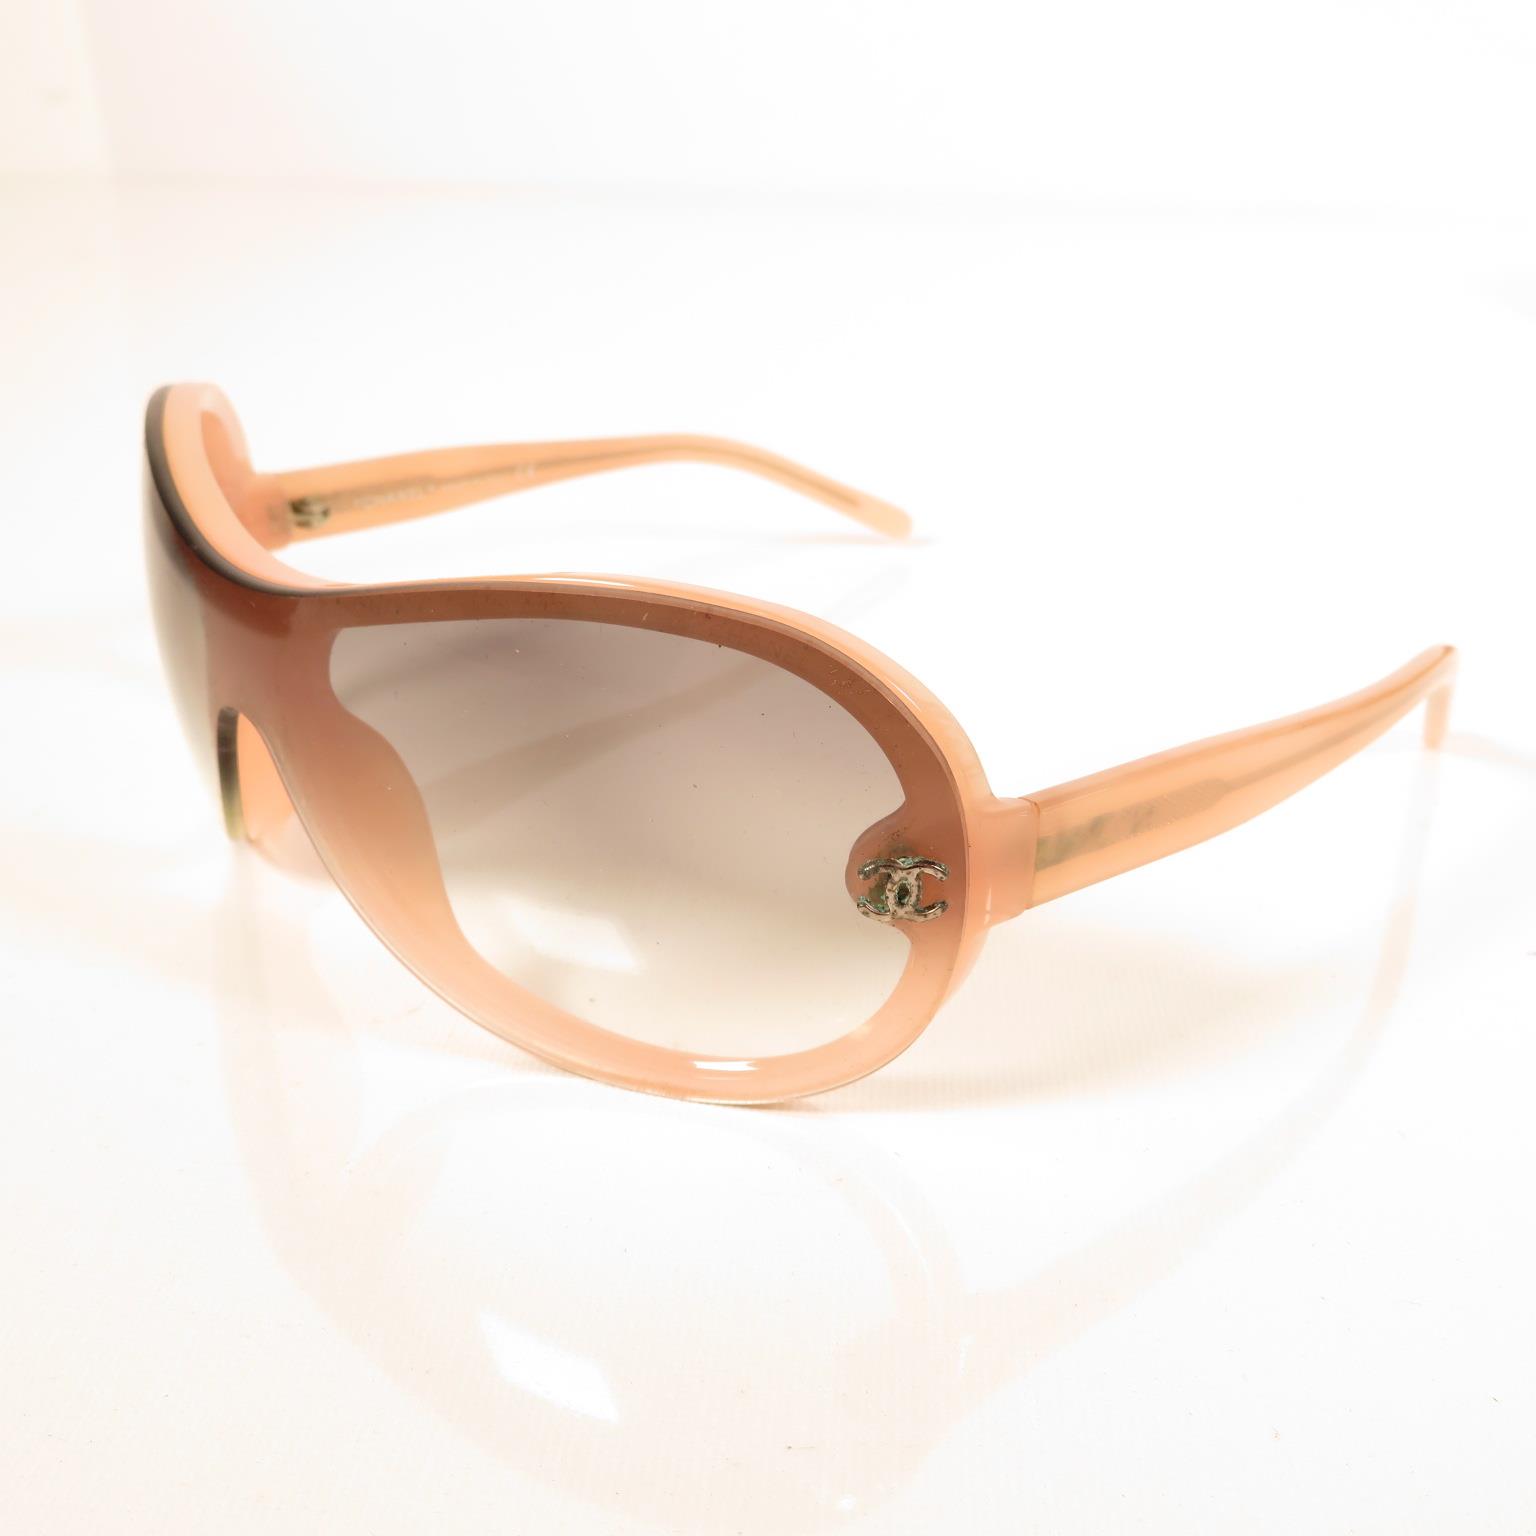 5x sets of Ray Ban sunglasses - - Image 4 of 23